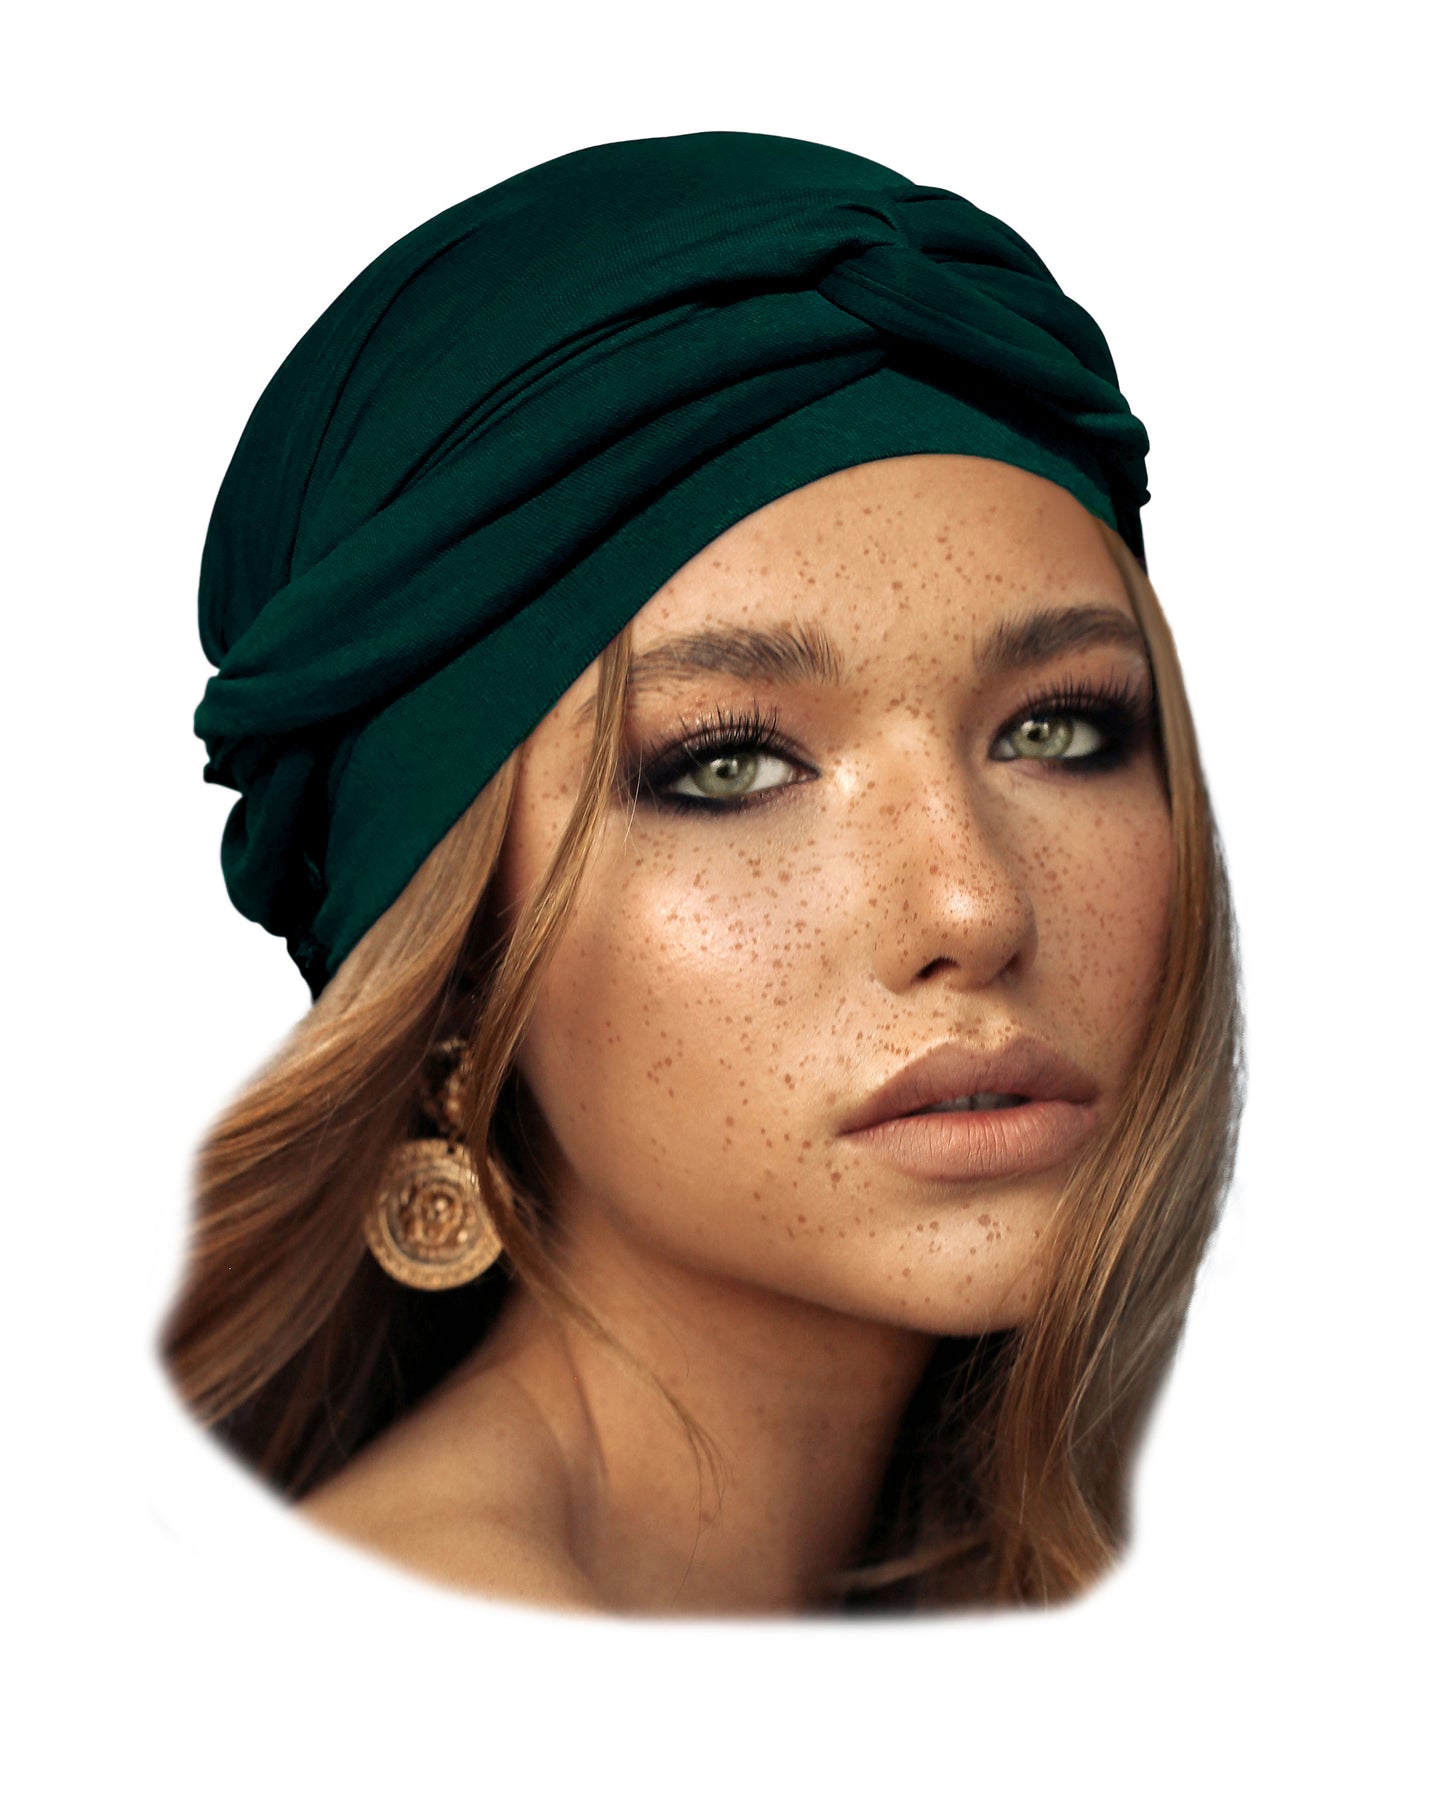 Emerald green long pre-tied headscarf